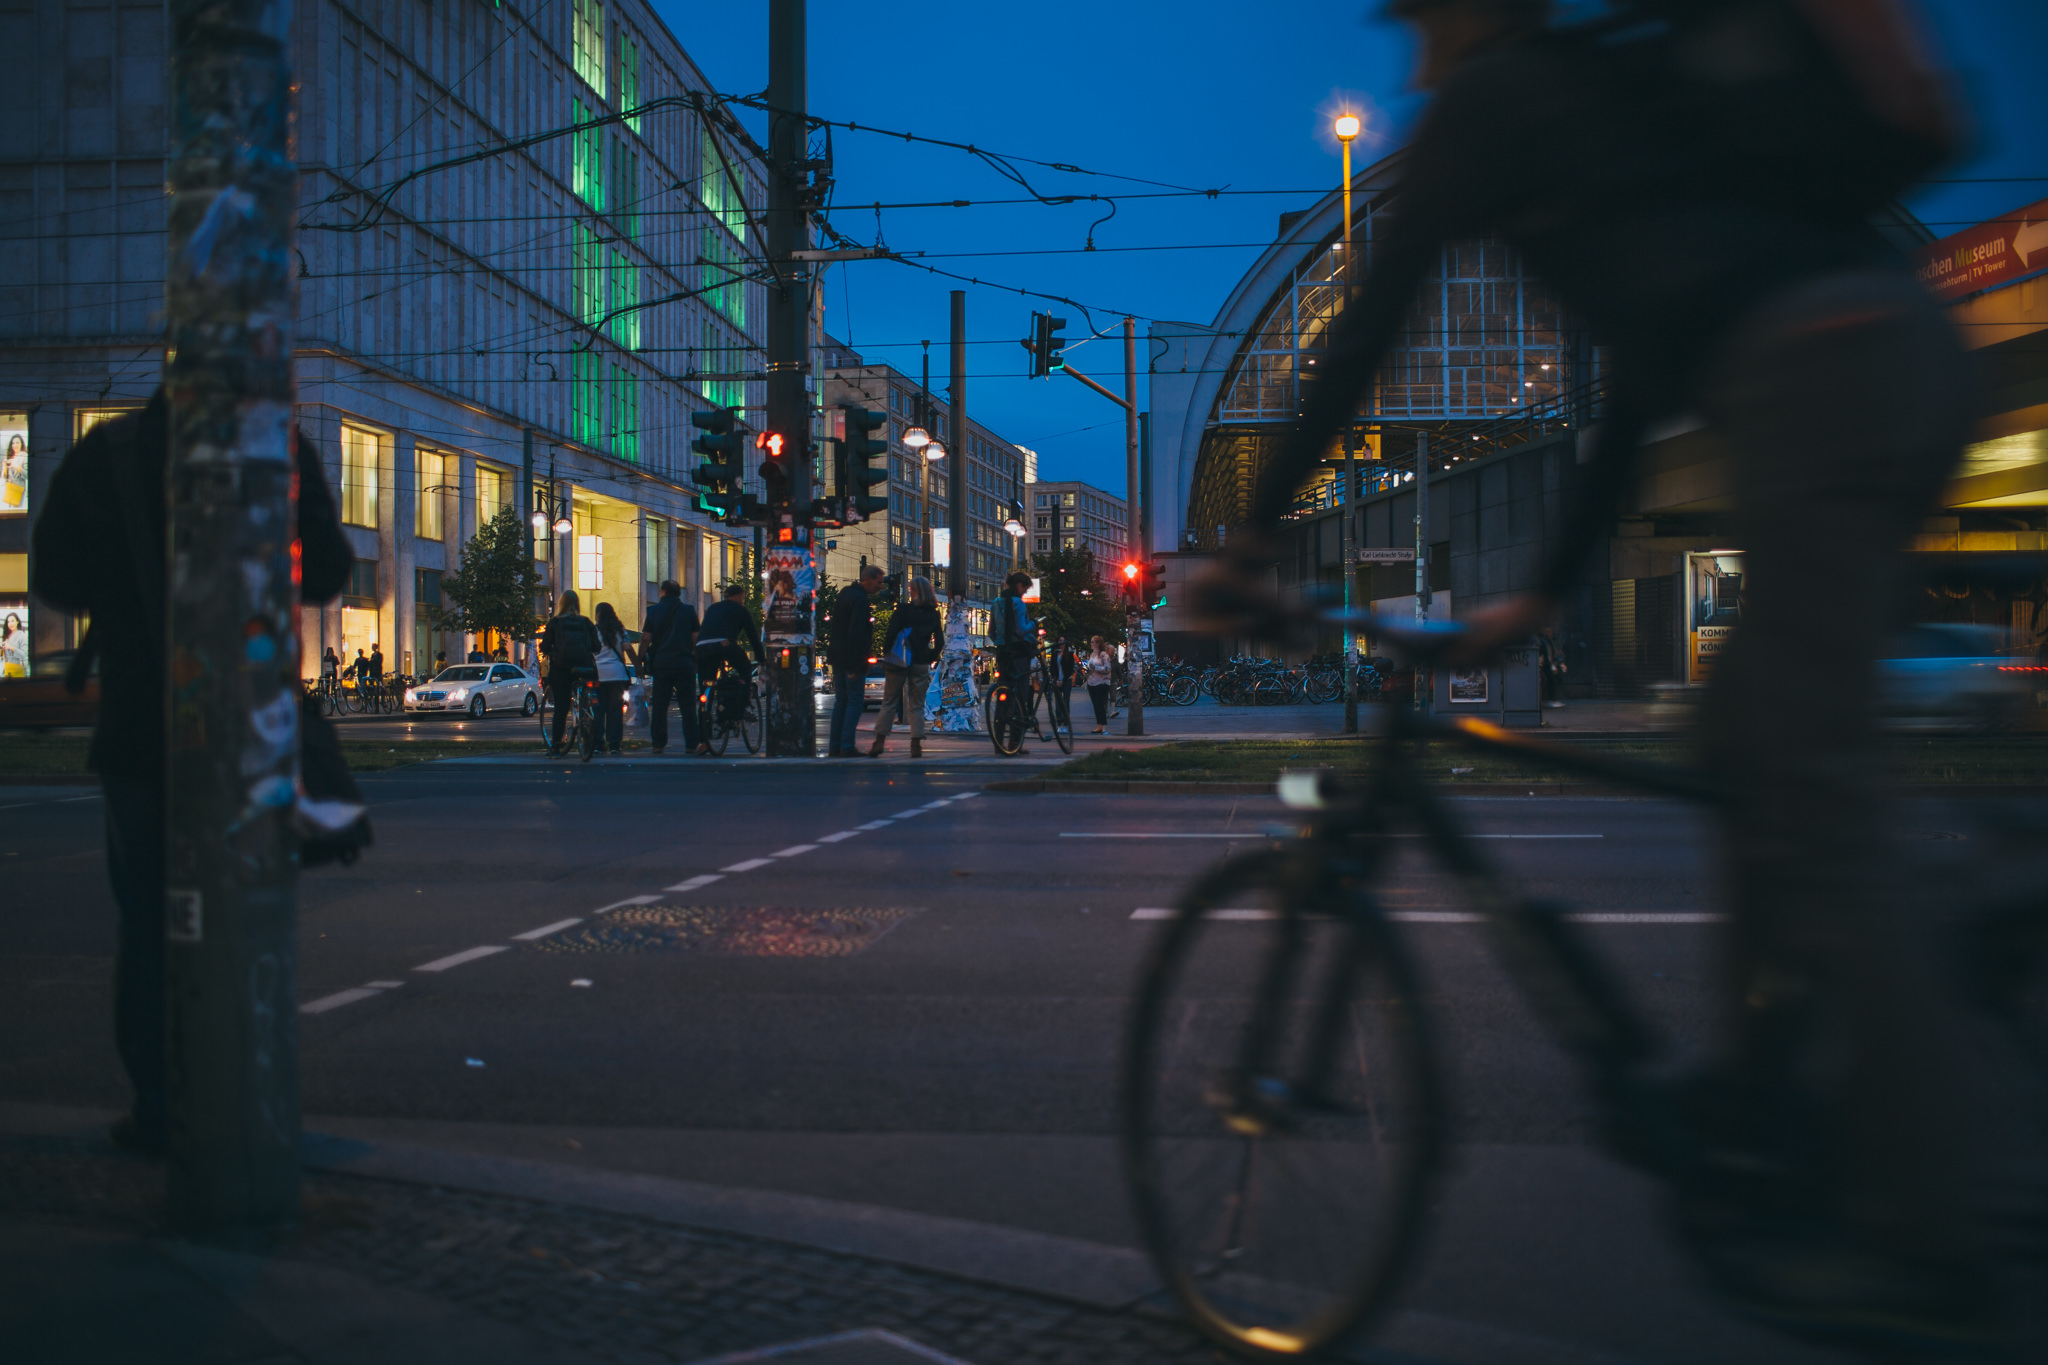 Night shot of busy Berlin crossing